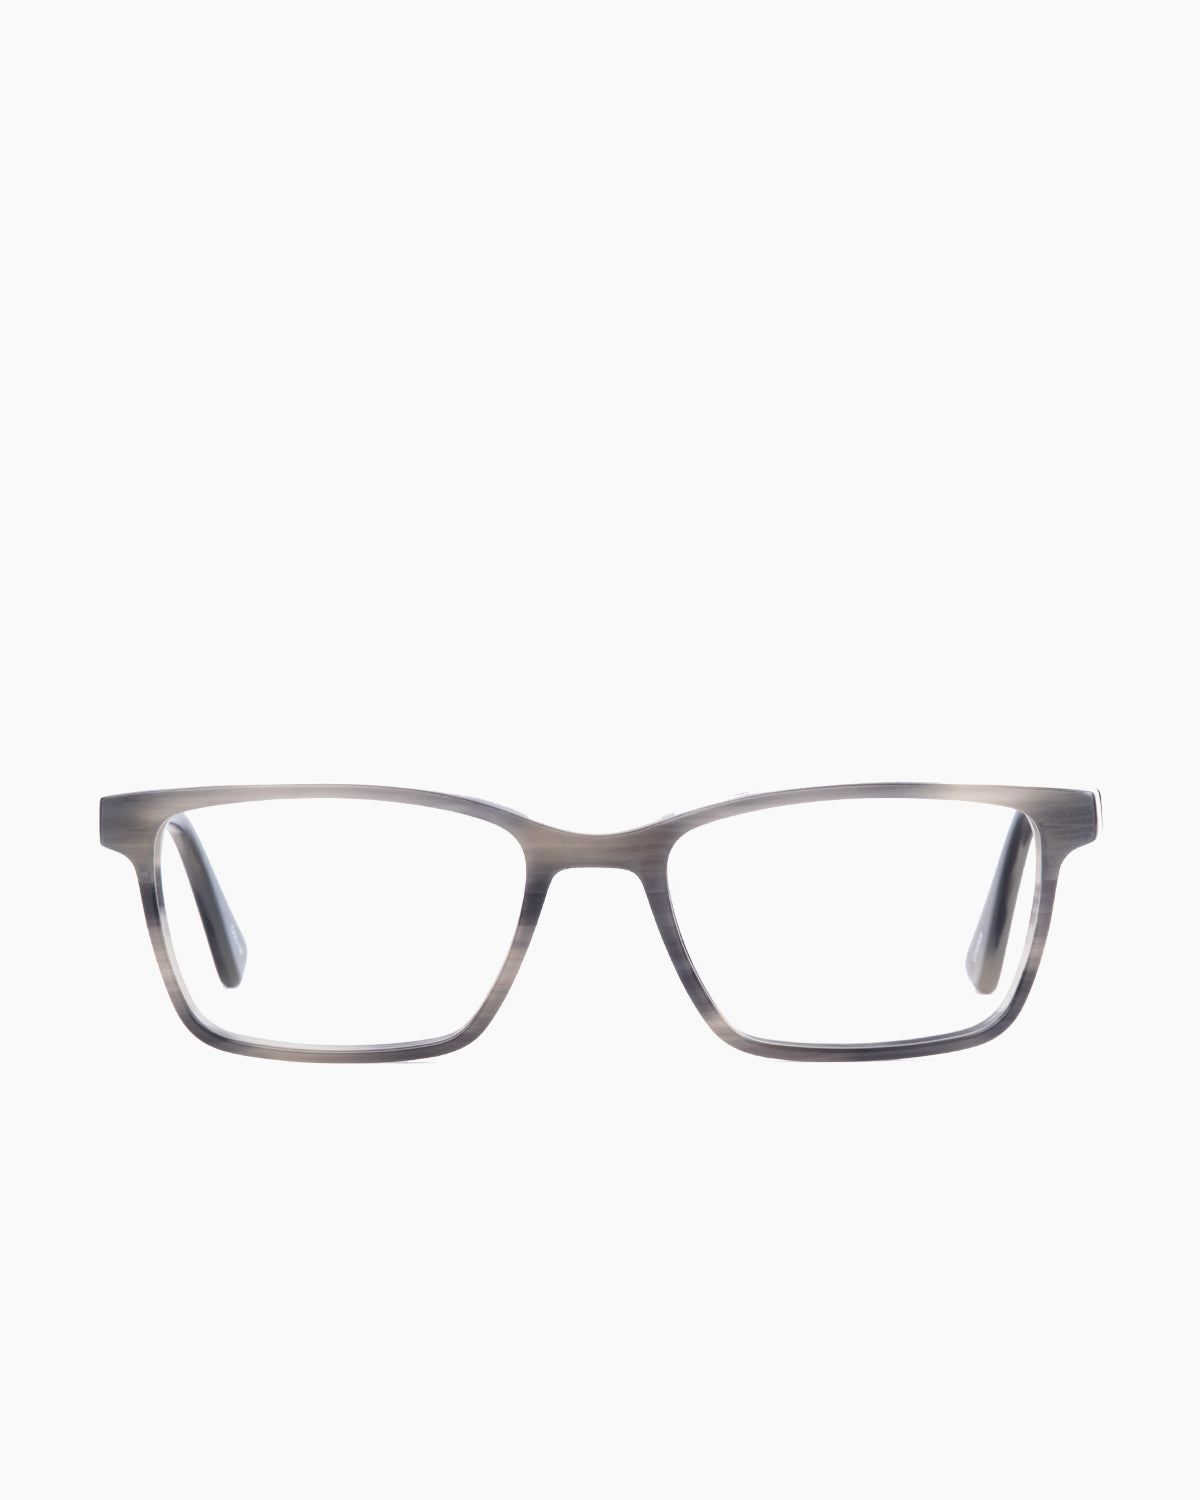 Evolve - Garfield - 137 | Bar à lunettes:  Marie-Sophie Dion